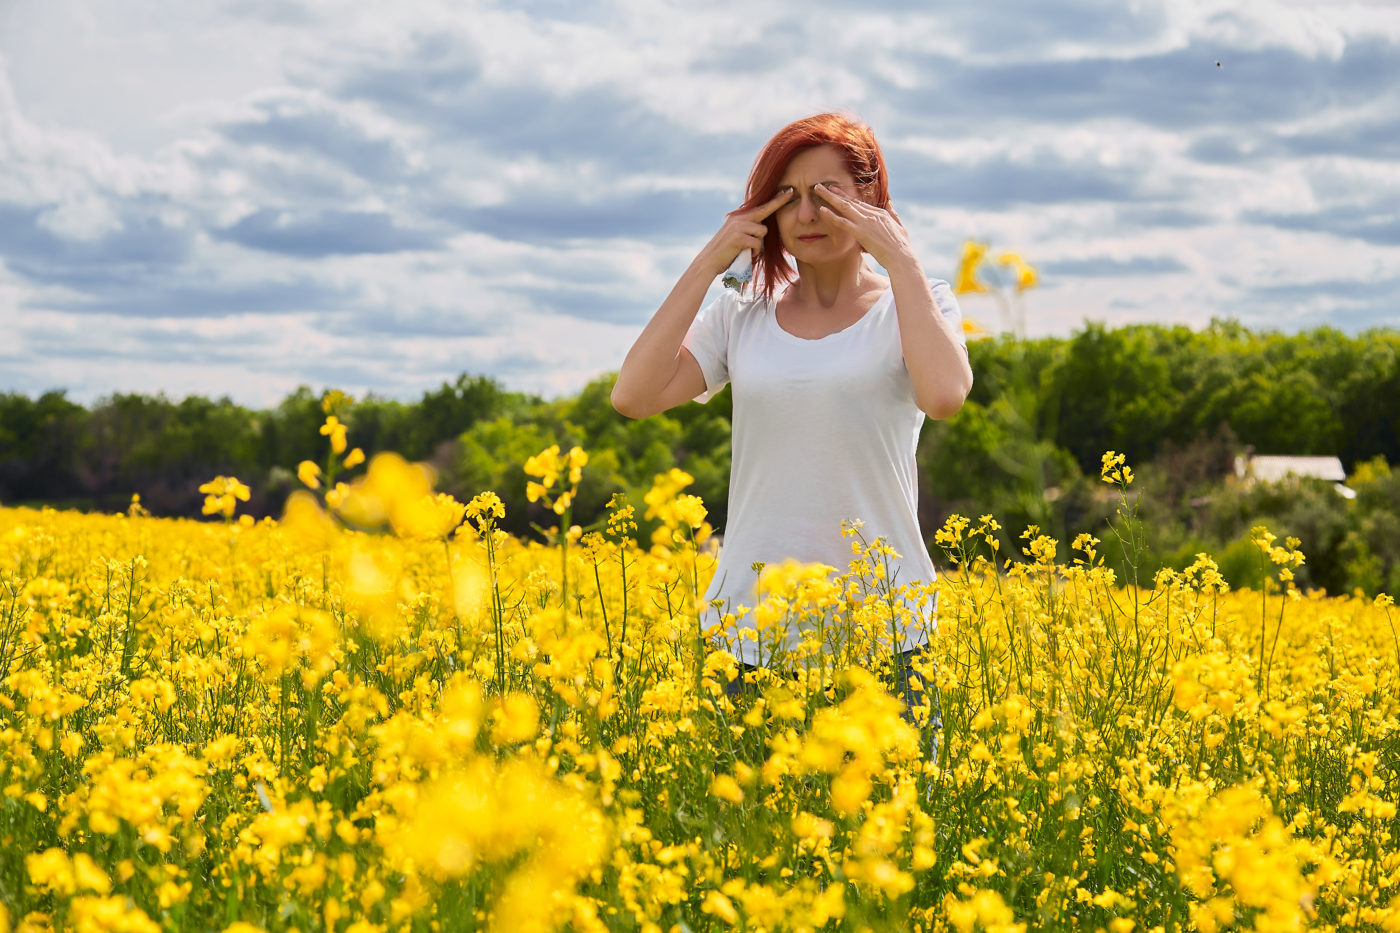 girl rubbing her eyes in field of flowers due to allergies